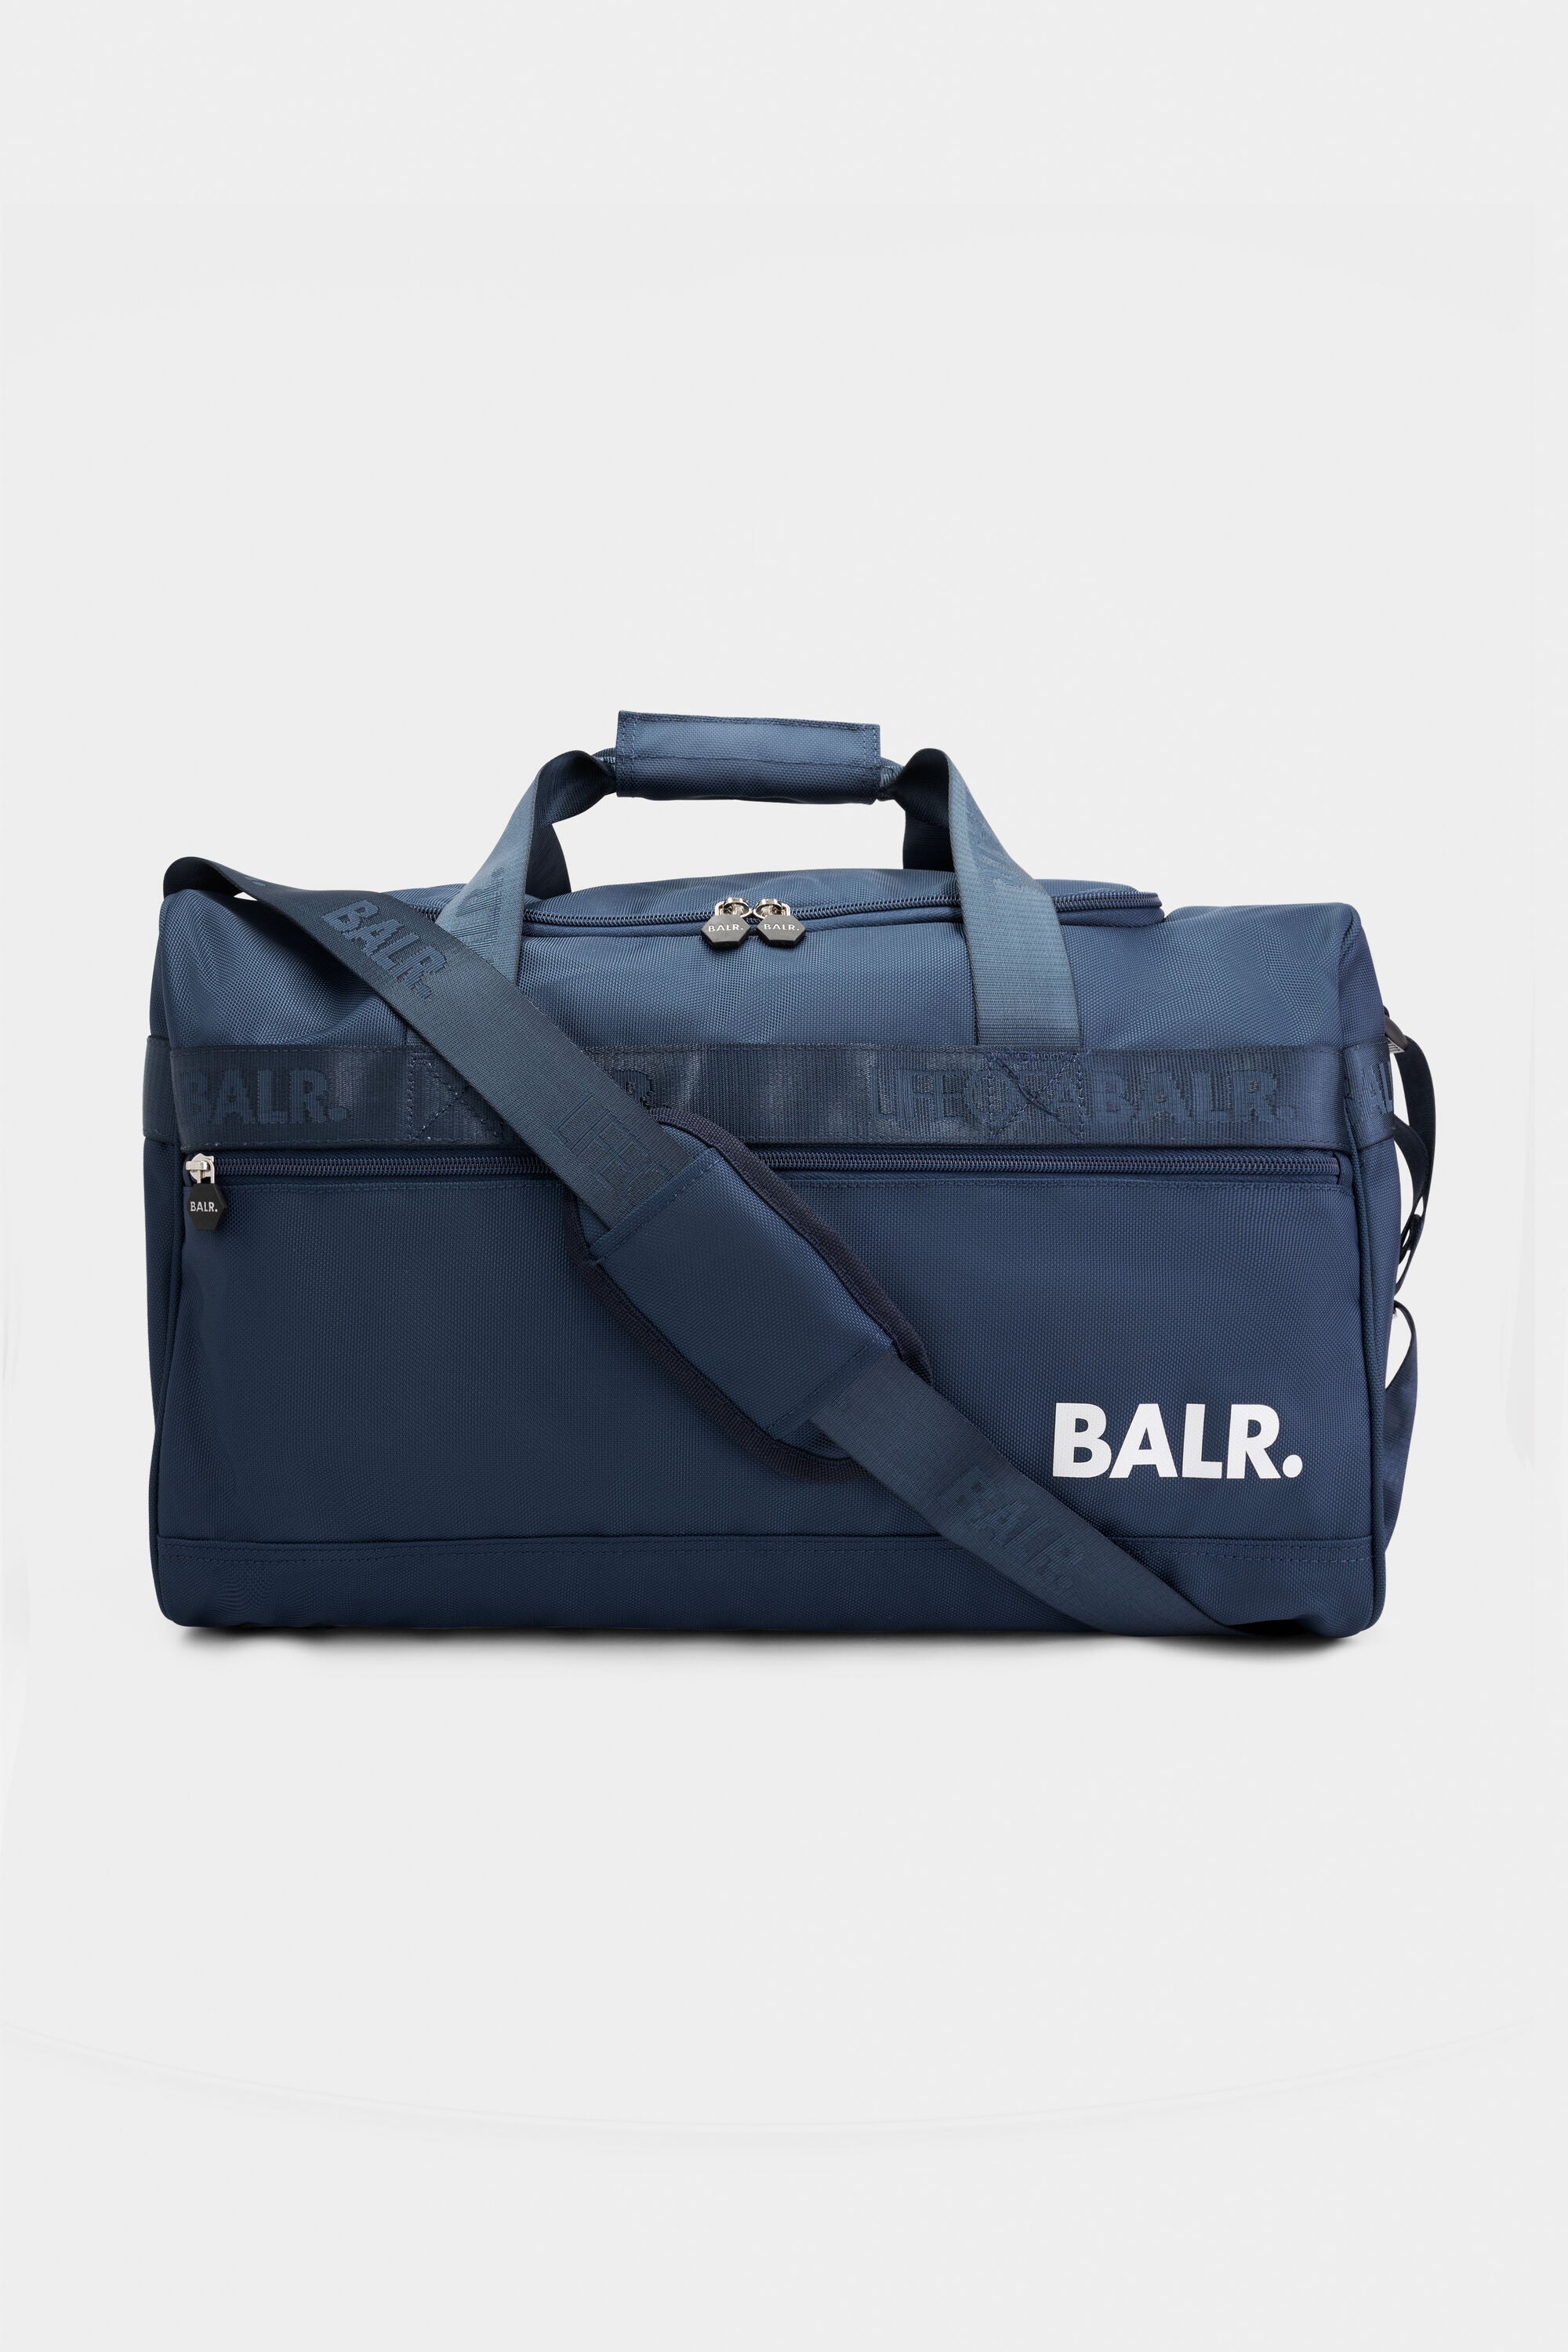 BALR. Duffle Bag Navy Blazer